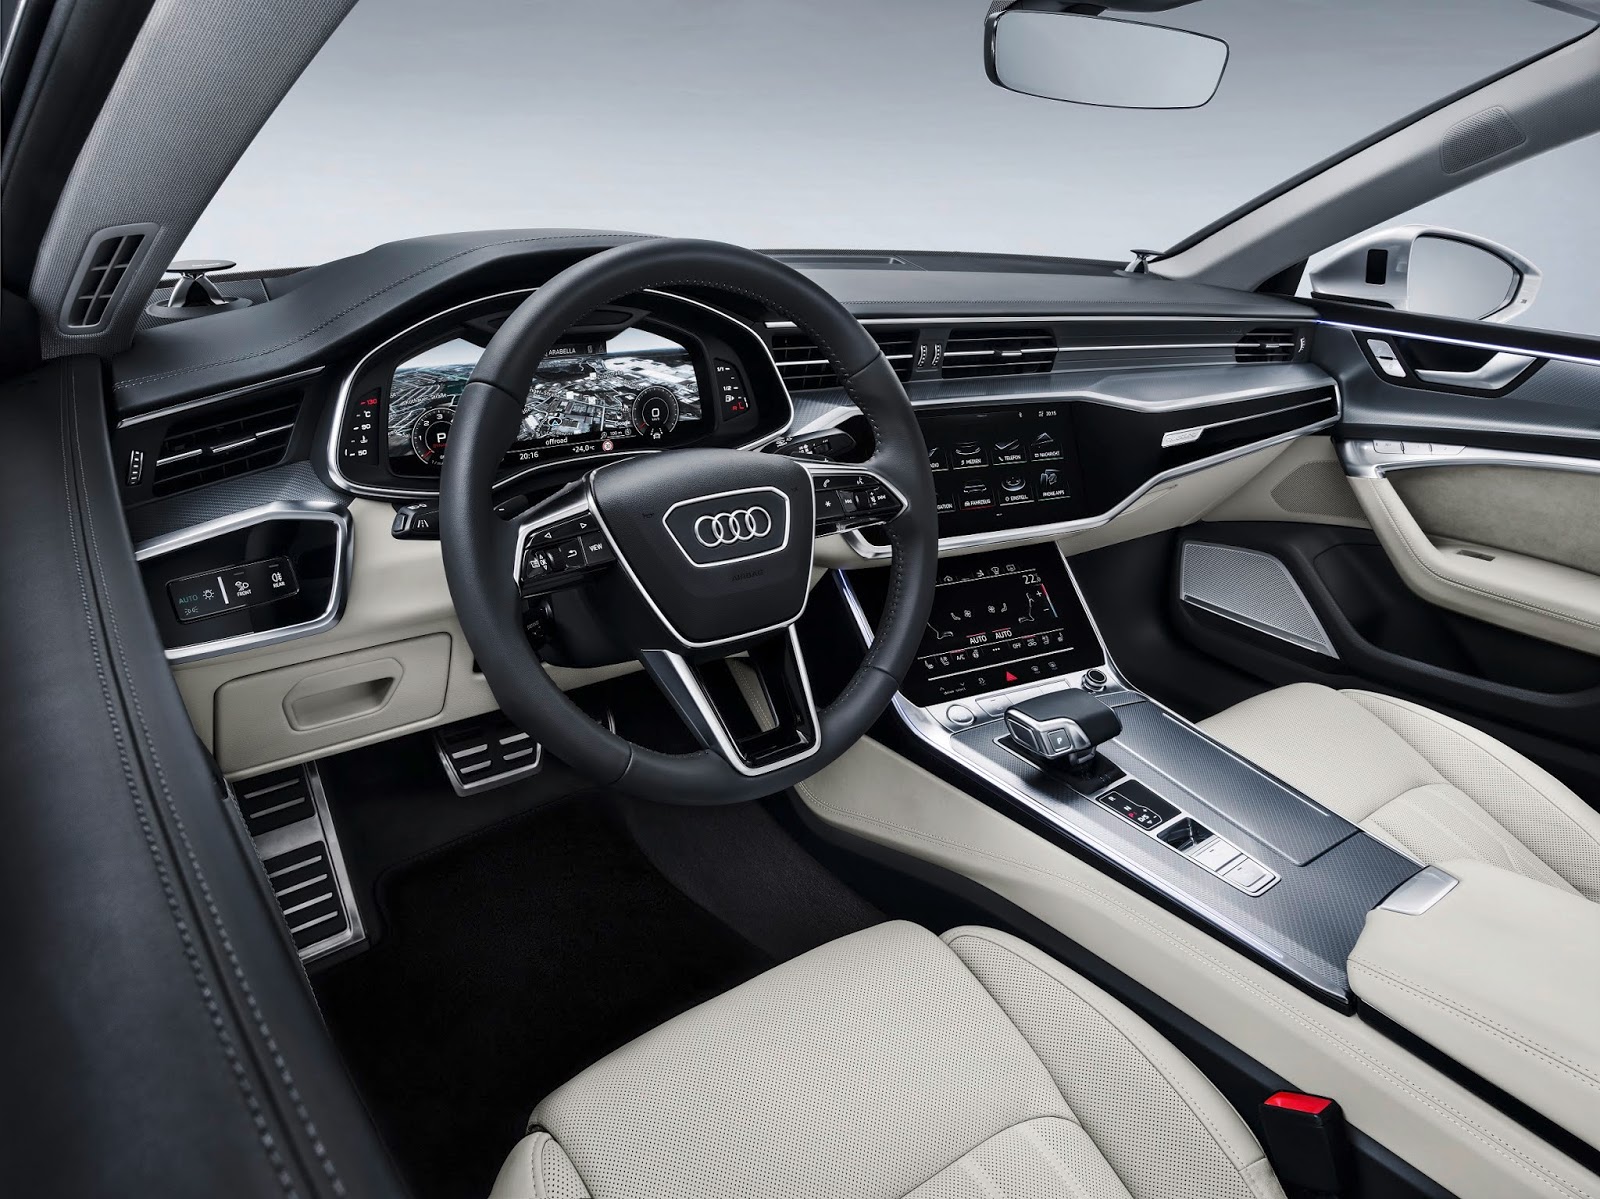 NEW2BAUDI2BA7 d Το Audi A7 είναι το Παγκόσμιο Πολυτελές Αυτοκίνητο του 2019